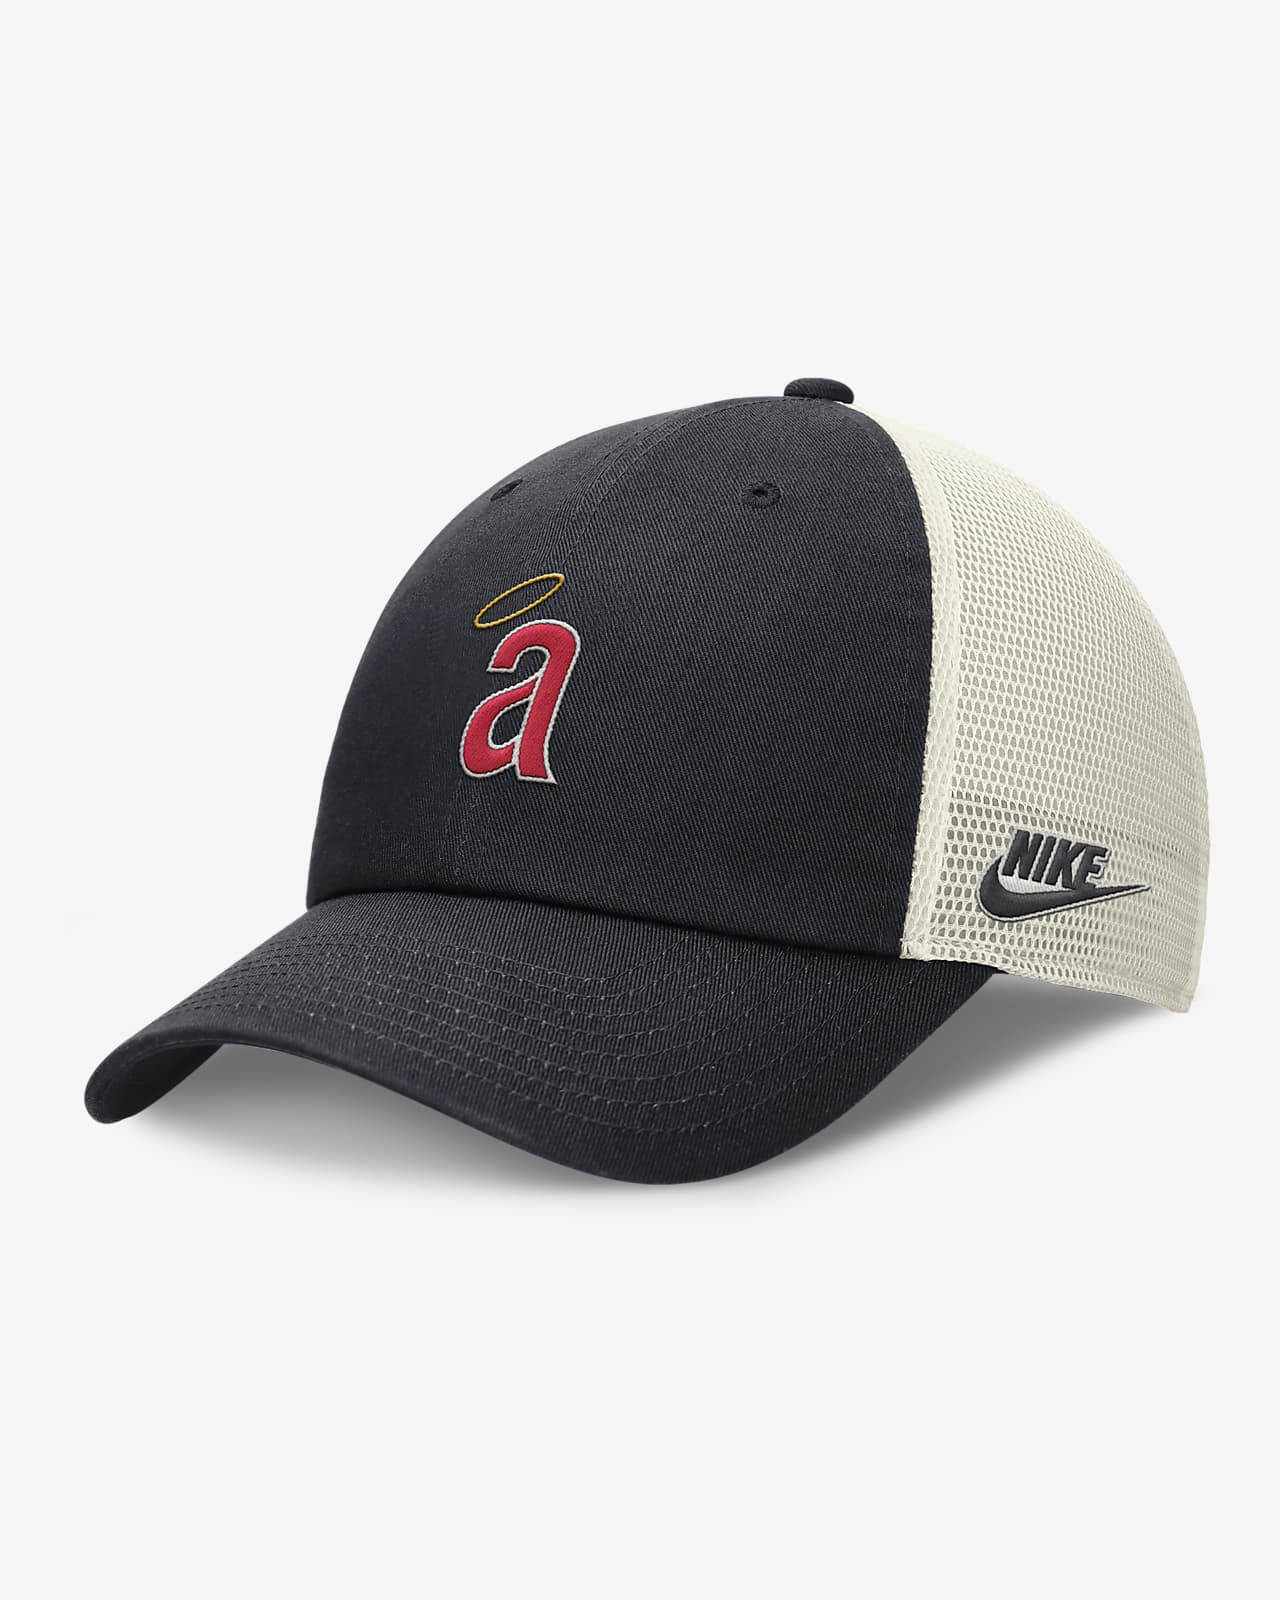 Gorra Nike de la MLB ajustable para hombre California Angels Rewind Cooperstown